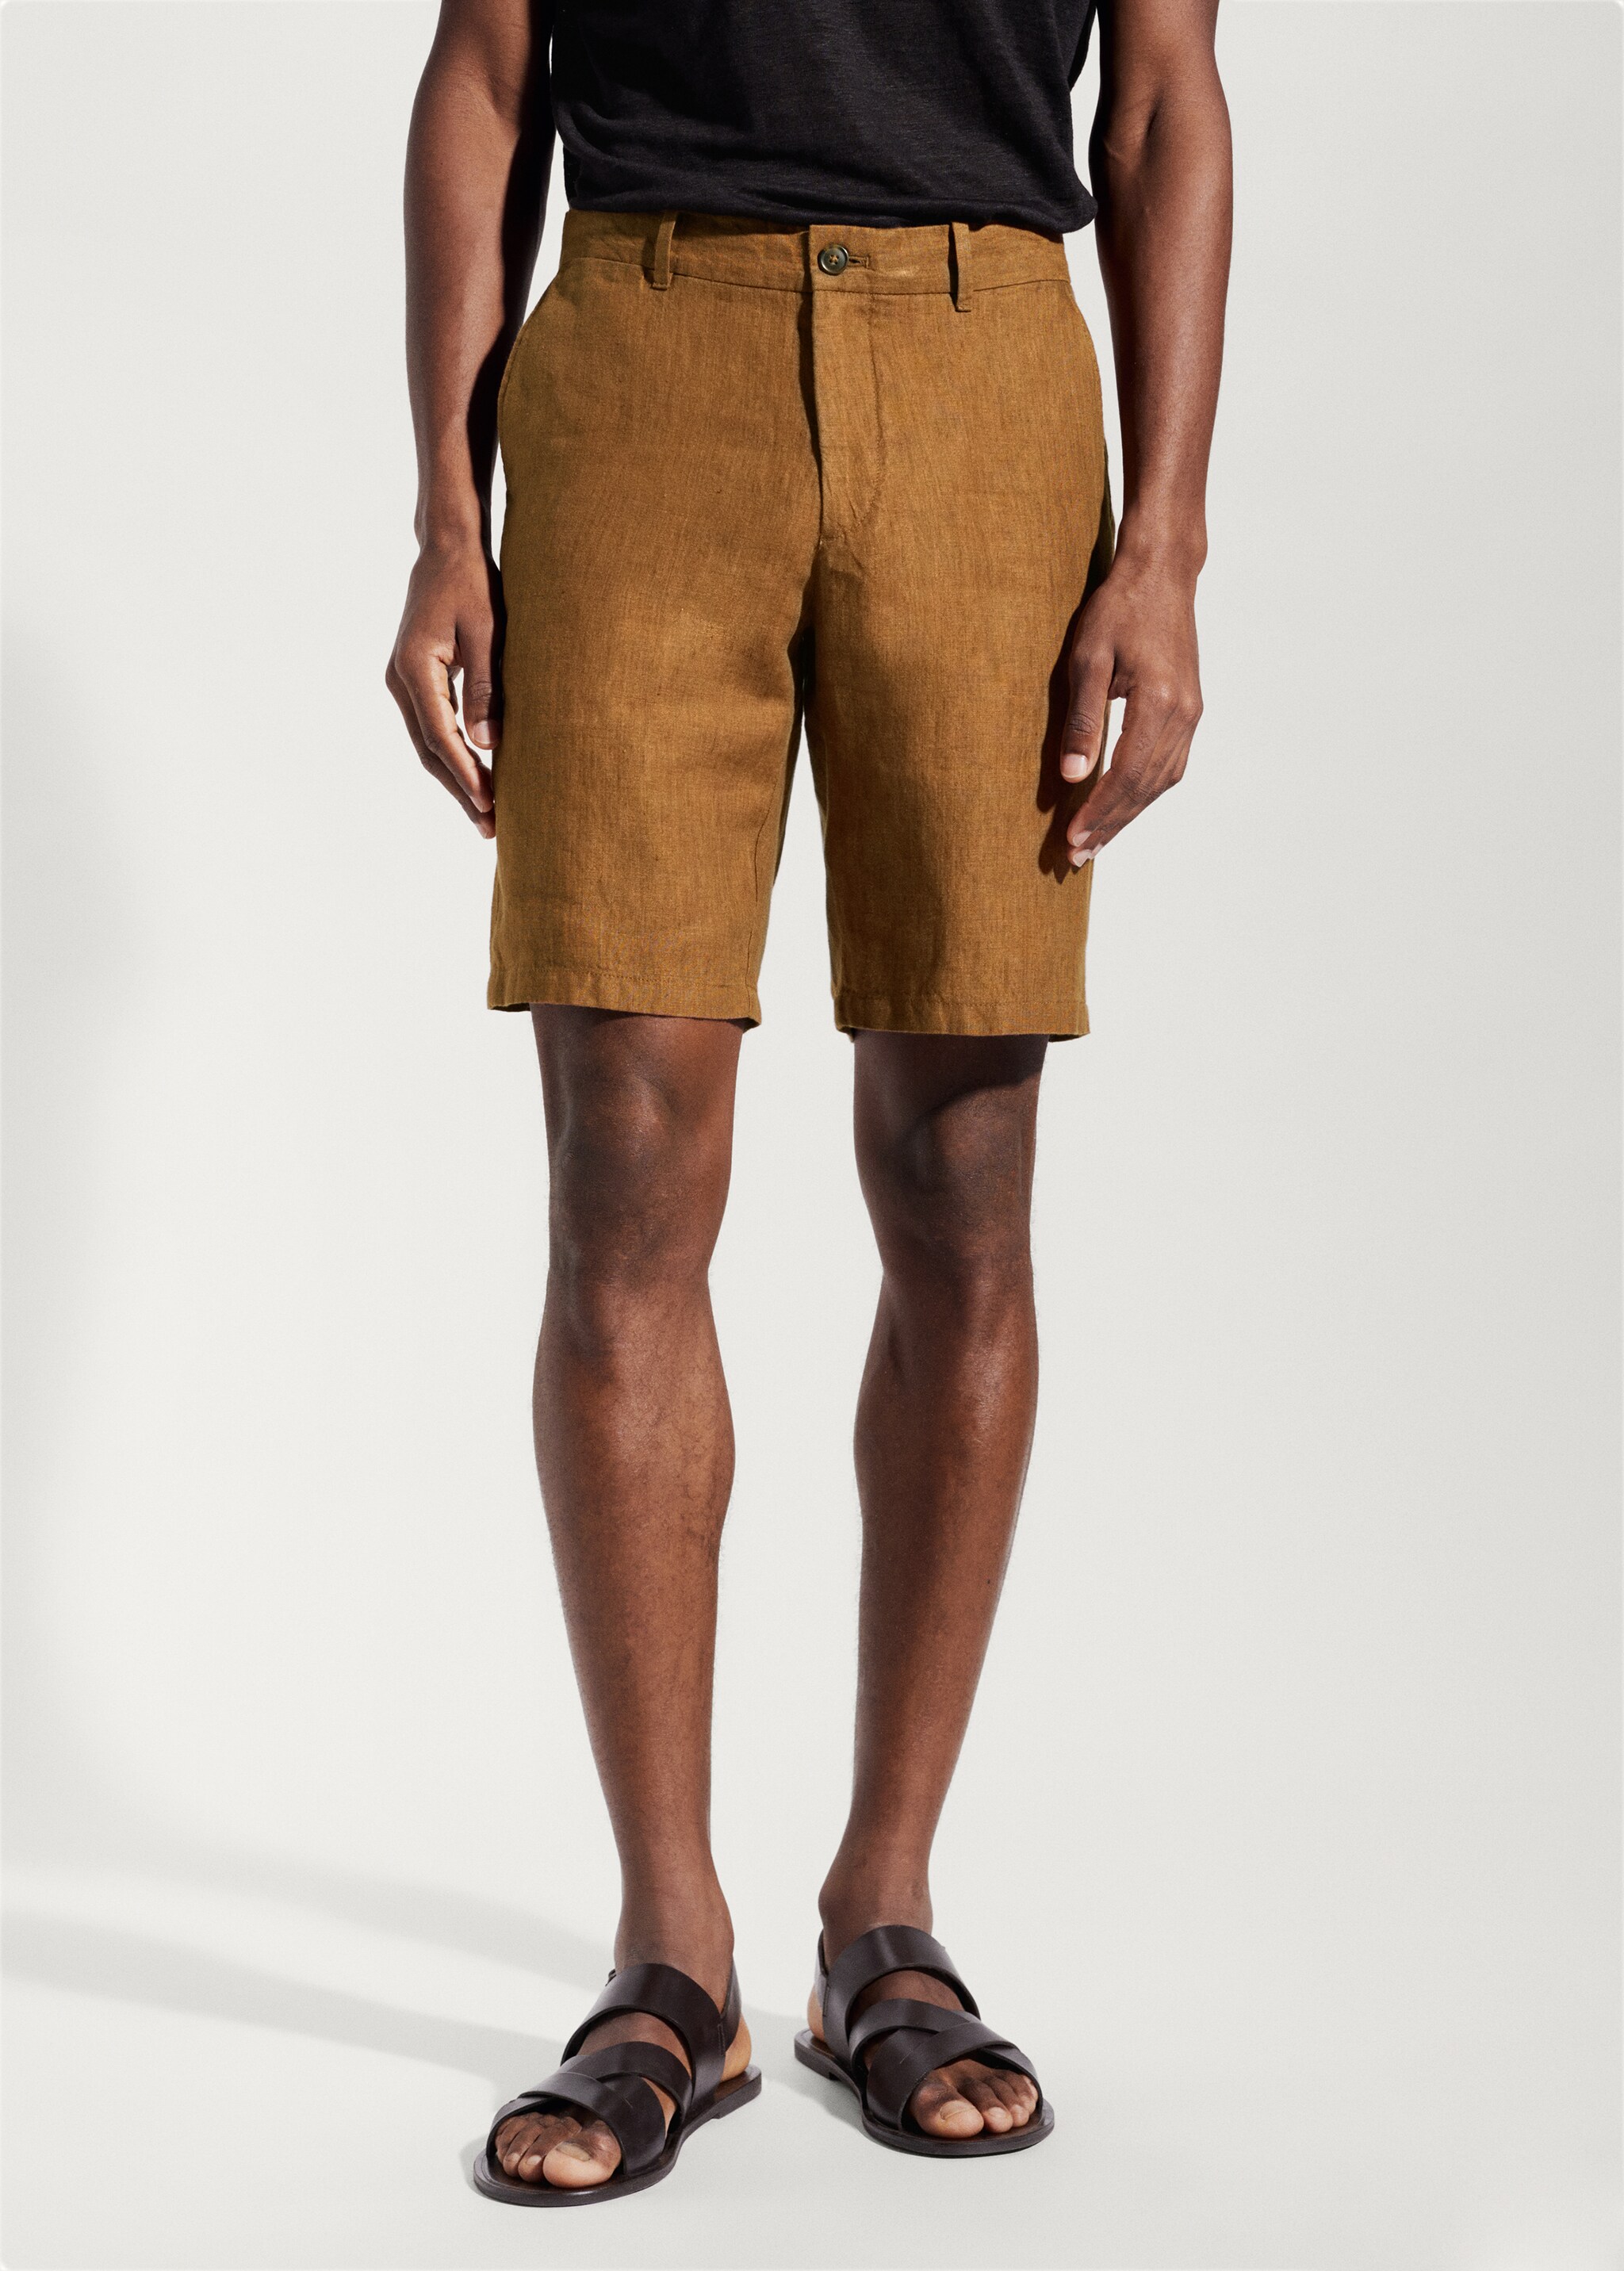 100% linen bermuda shorts - Medium plane